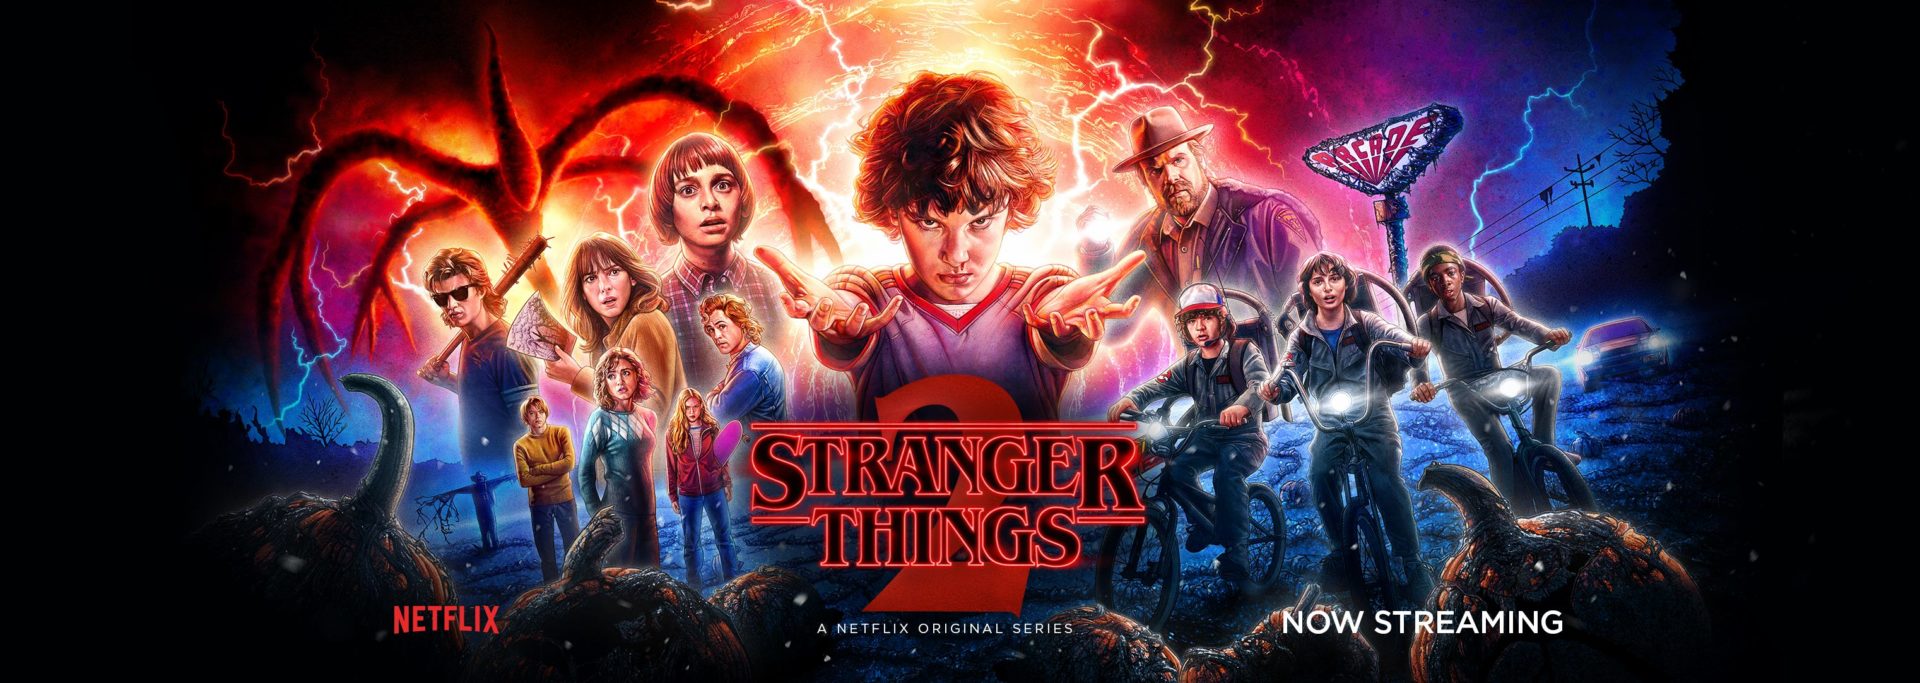 Netflix จับมือ Telltale Games ร่วมกันพัฒนาเกม Stranger Things